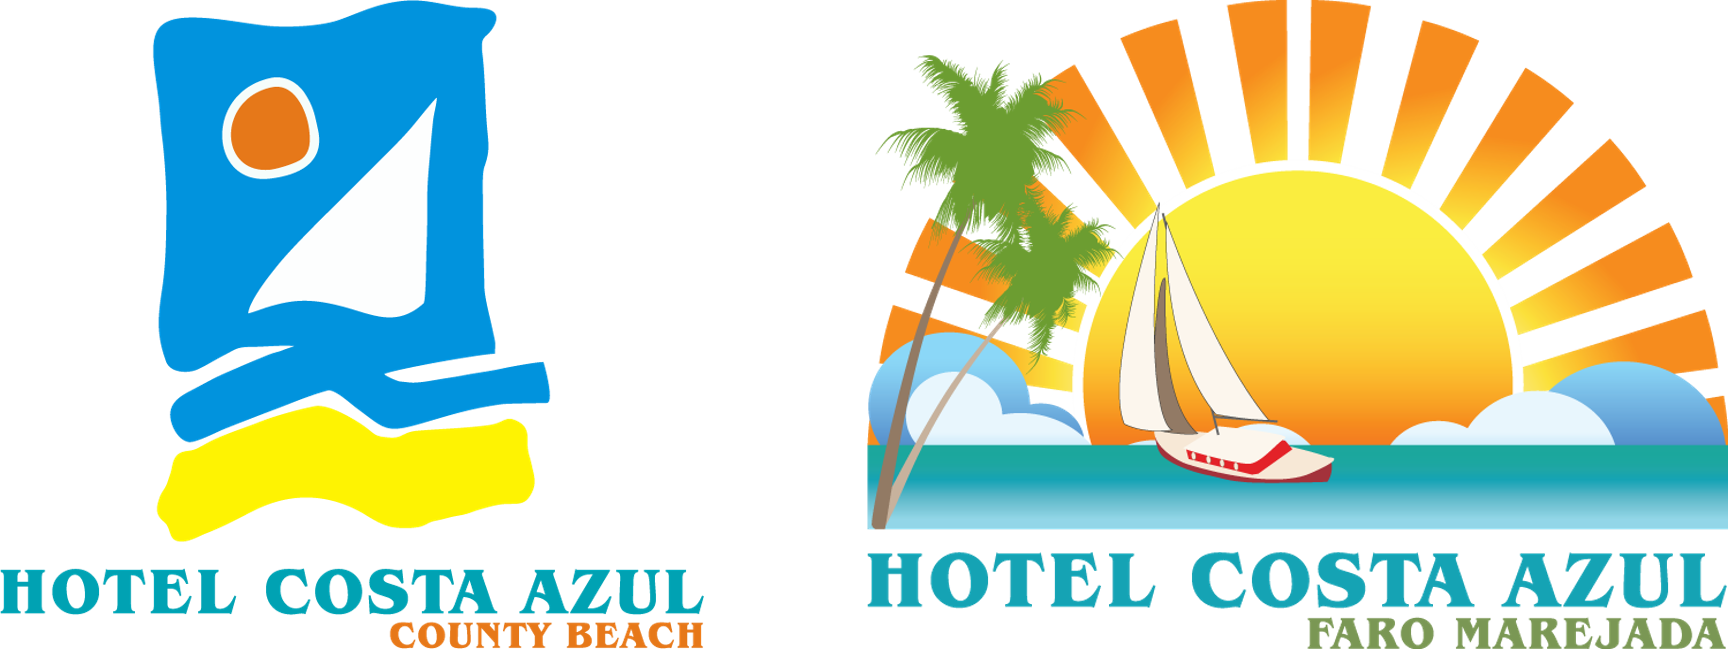 Grupo Hoteles Costa Azul